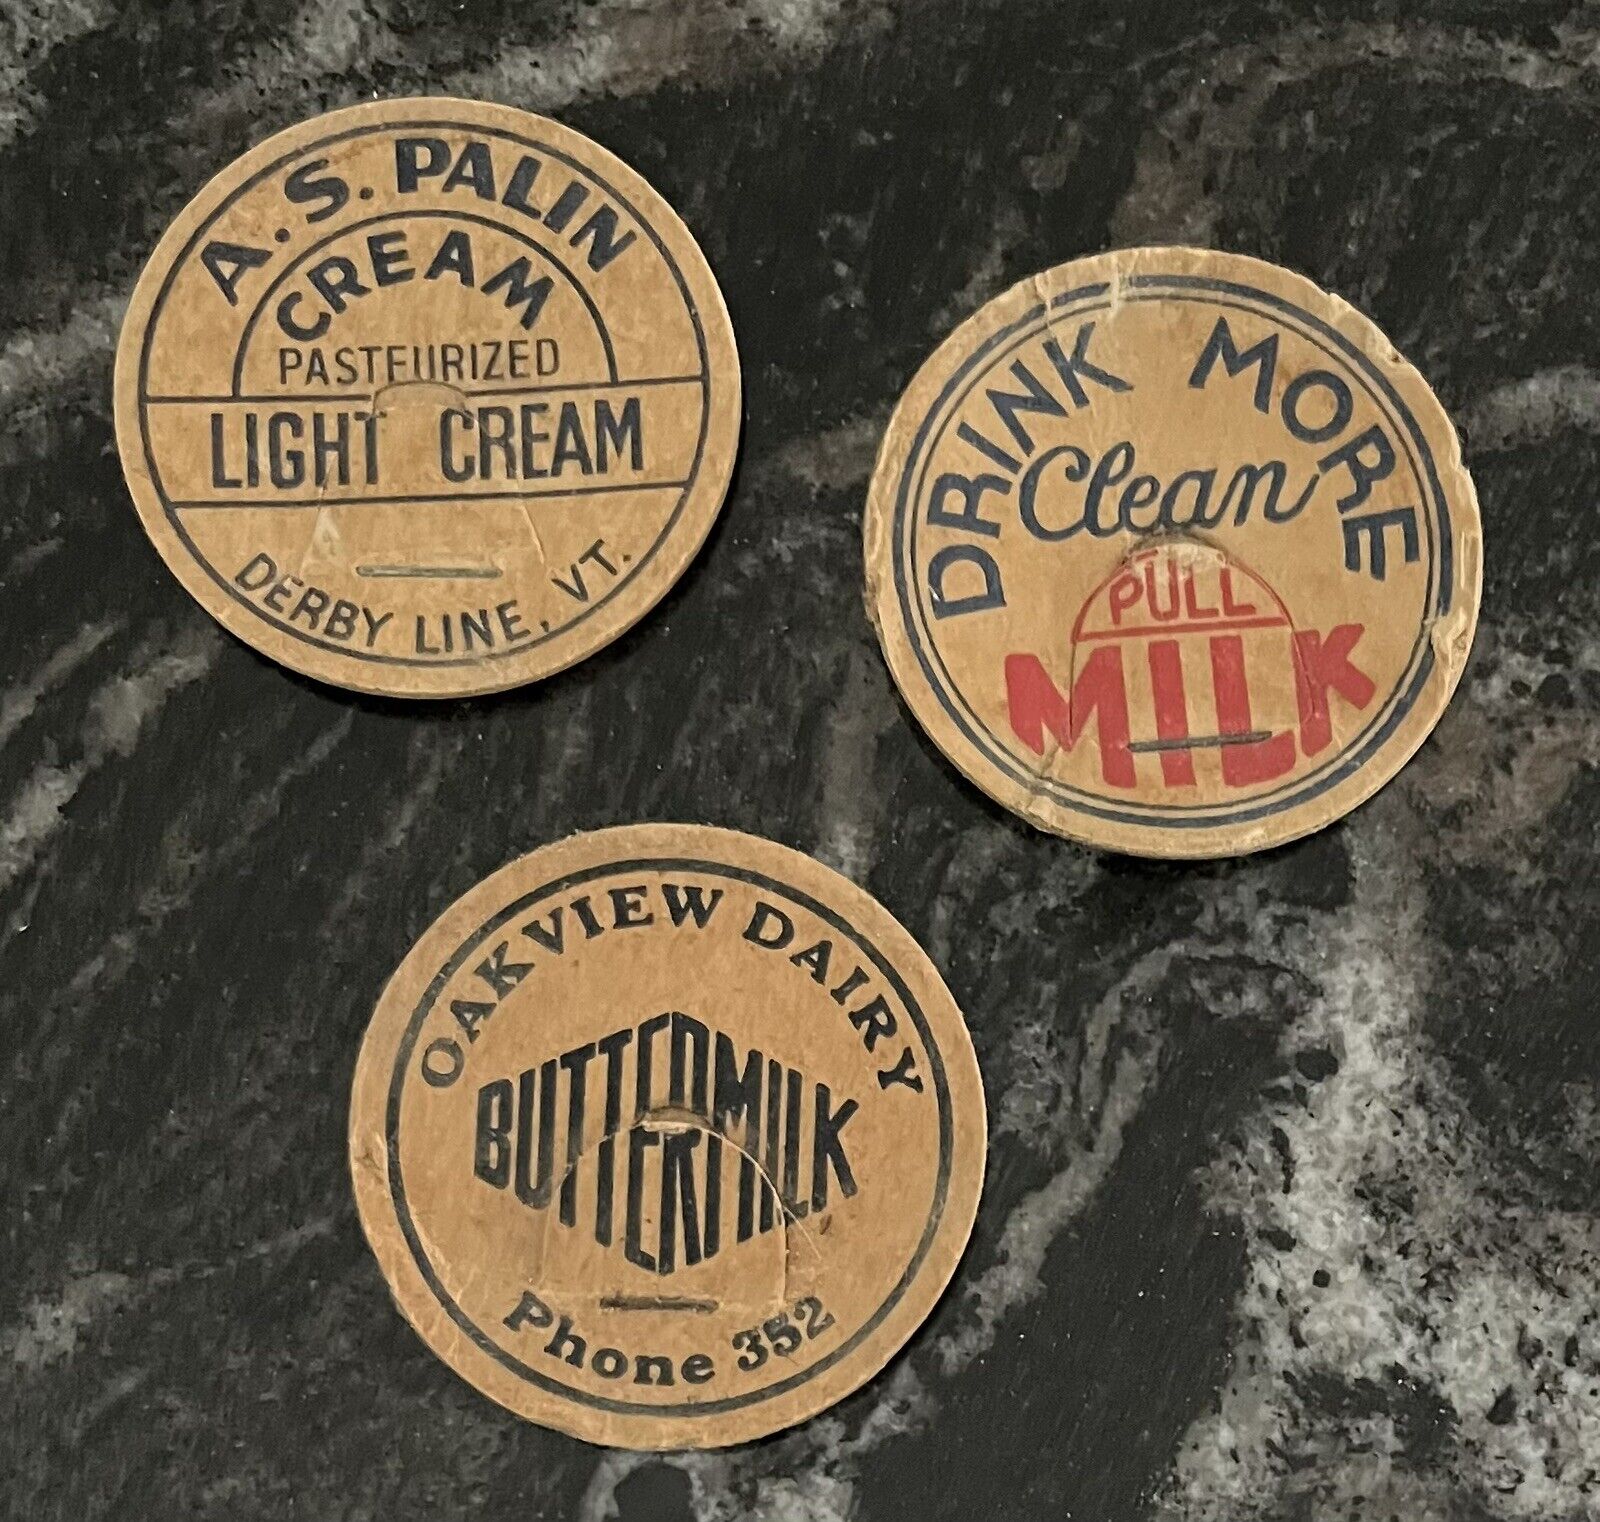 3 Vintage Dairy Cream Bottle Caps Palin, Drink More Clean Milk, Oakview Dairy